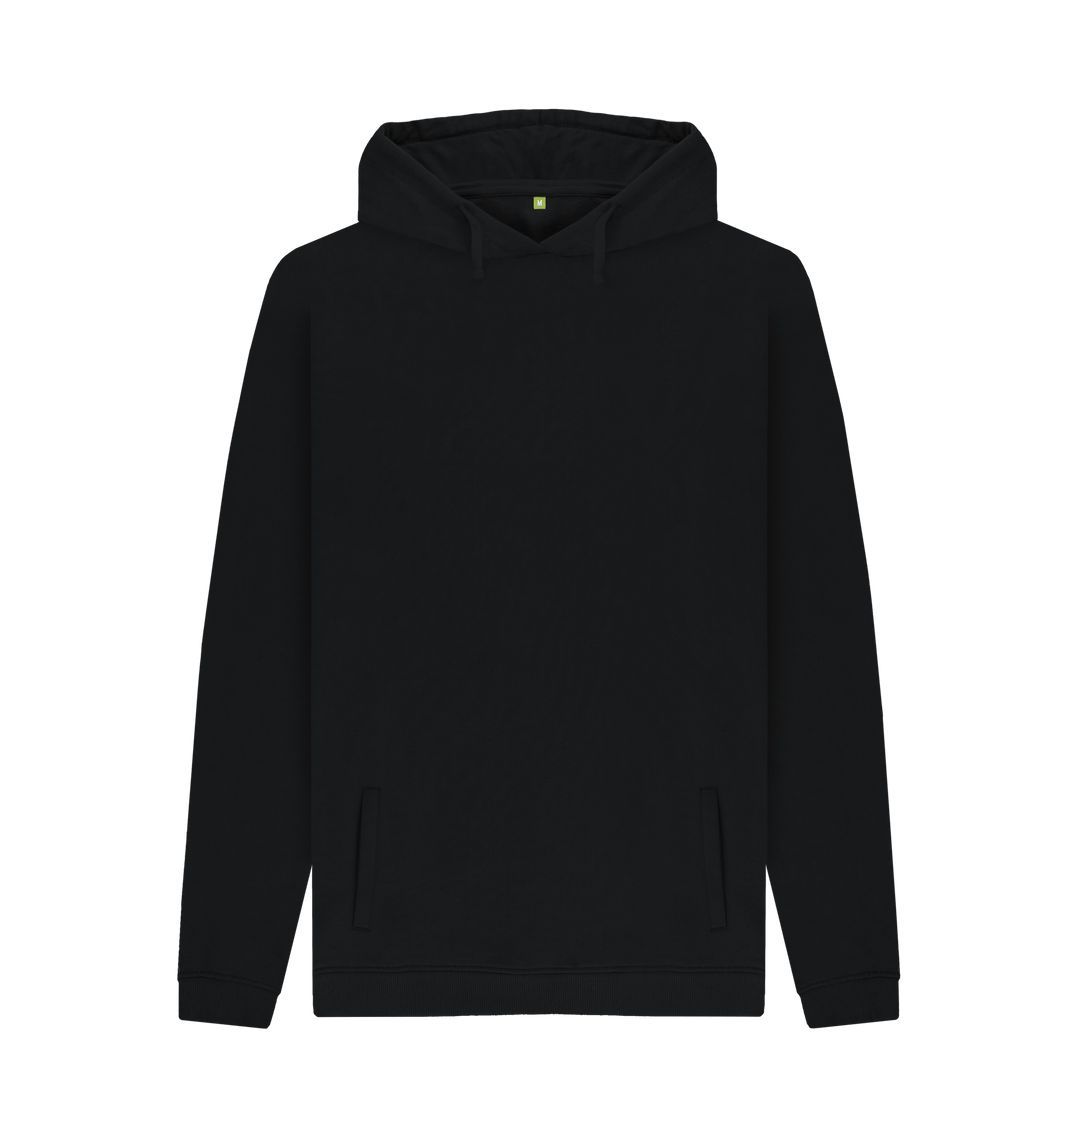 Black men's organic cotton hoodie